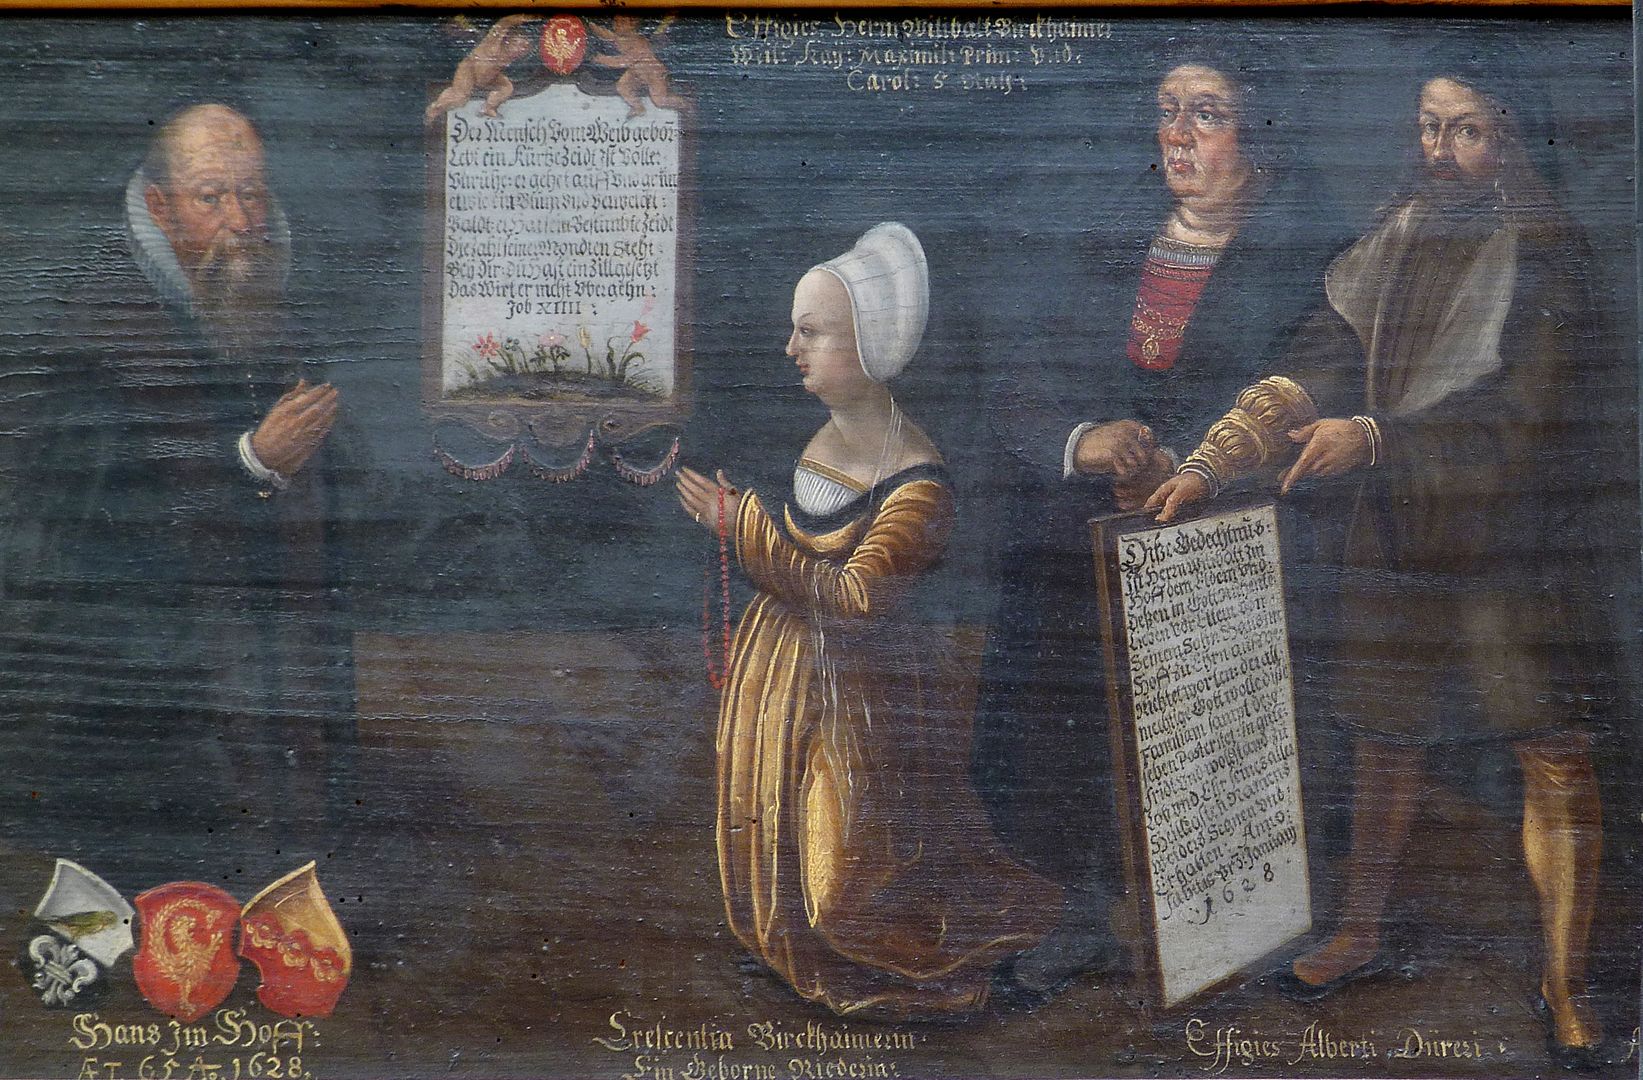 MemoriaL tablet for Willibald Imhoff Detailed view with Hans Imhoff, Creszentia (née Rieder, wife of Willibald Pirckheimer), Willibald Pirckheimer and Albrecht Dürer